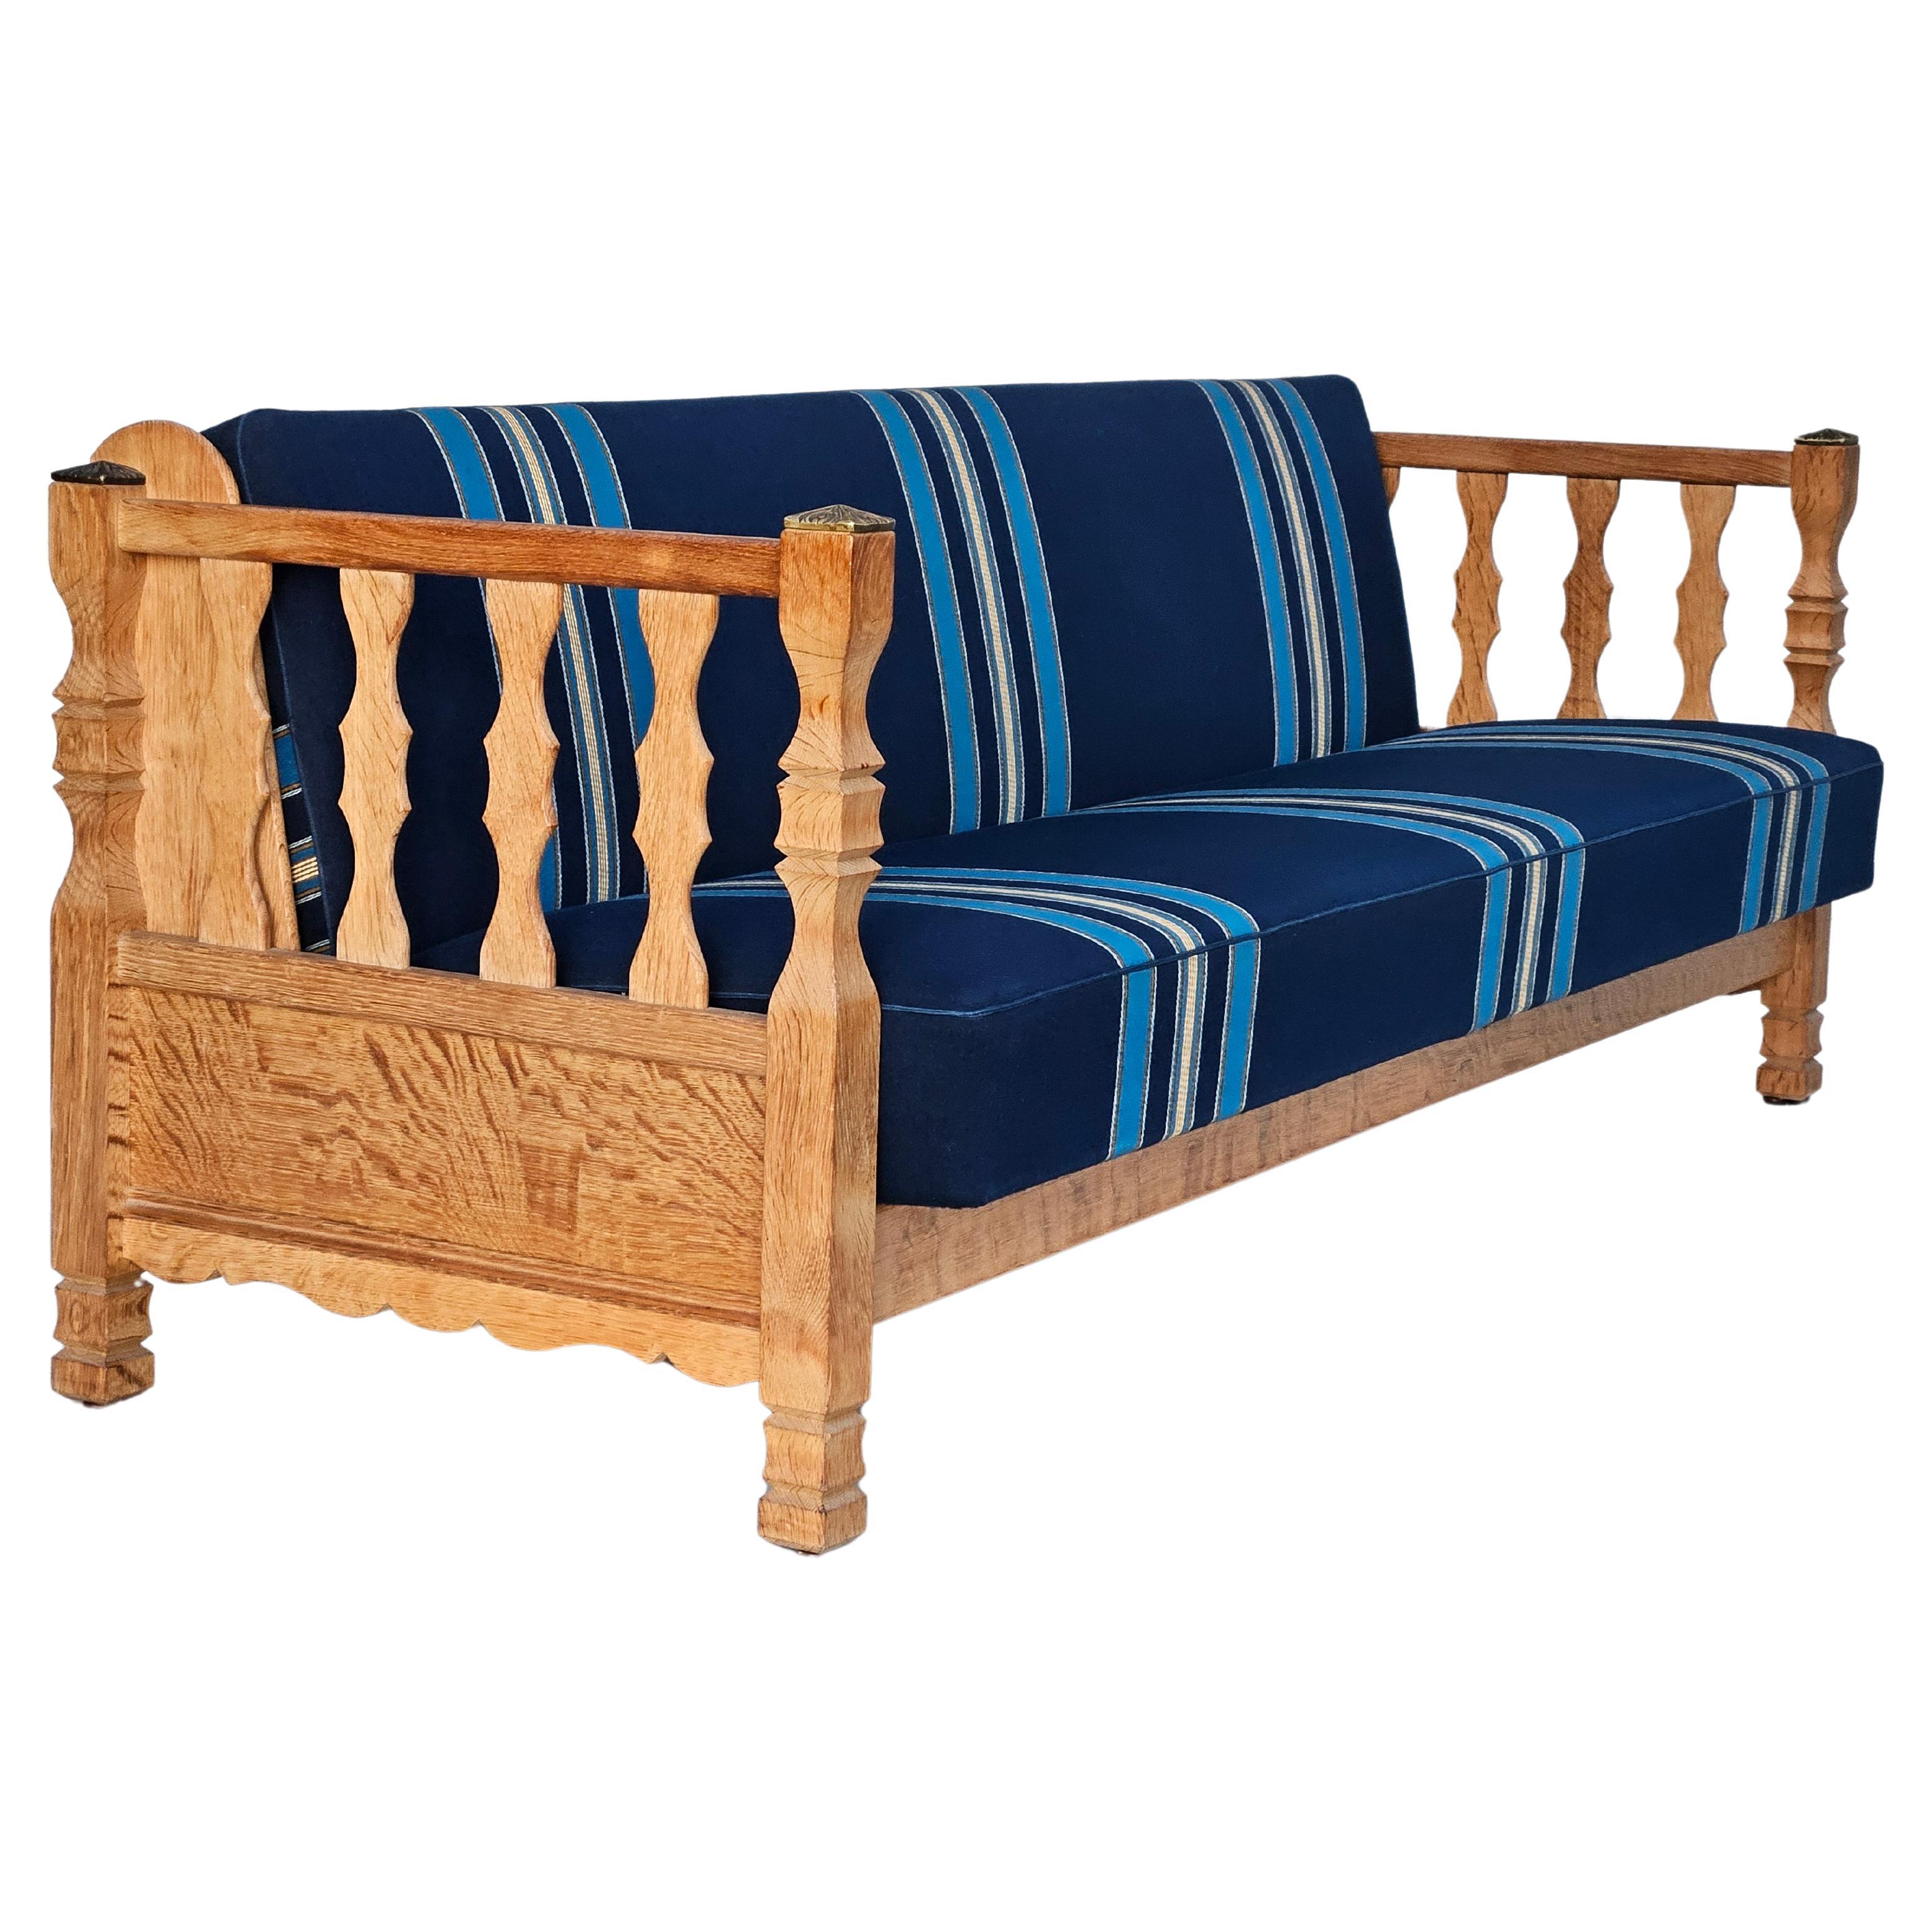 1970s, Danish sleeping foldable sofa, oak wood, original very good condition. For Sale